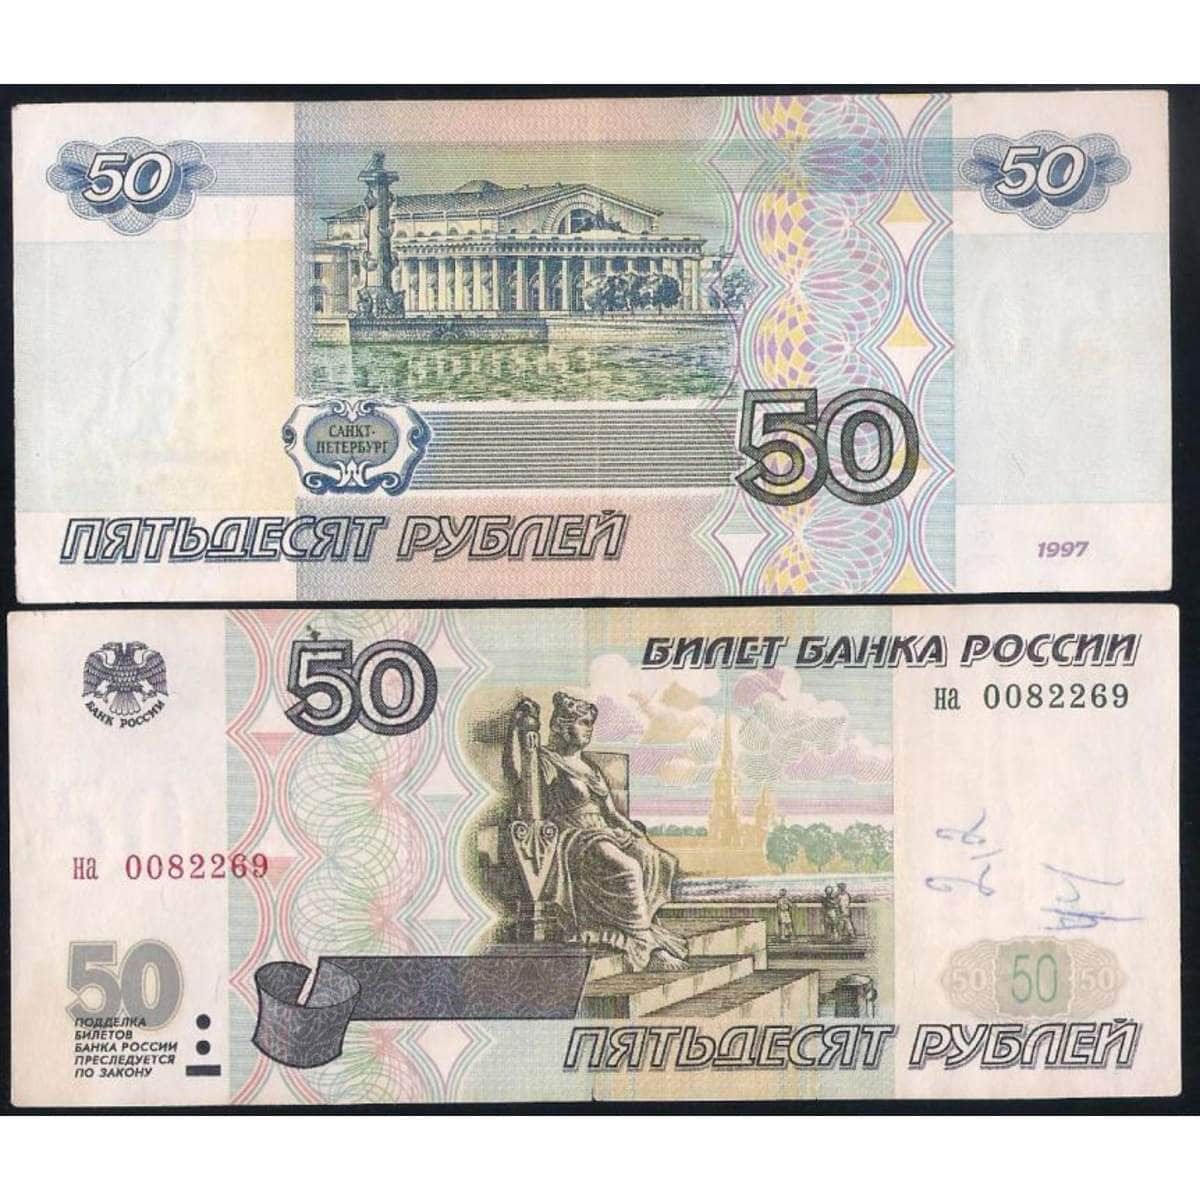 50 рублей на steam фото 70